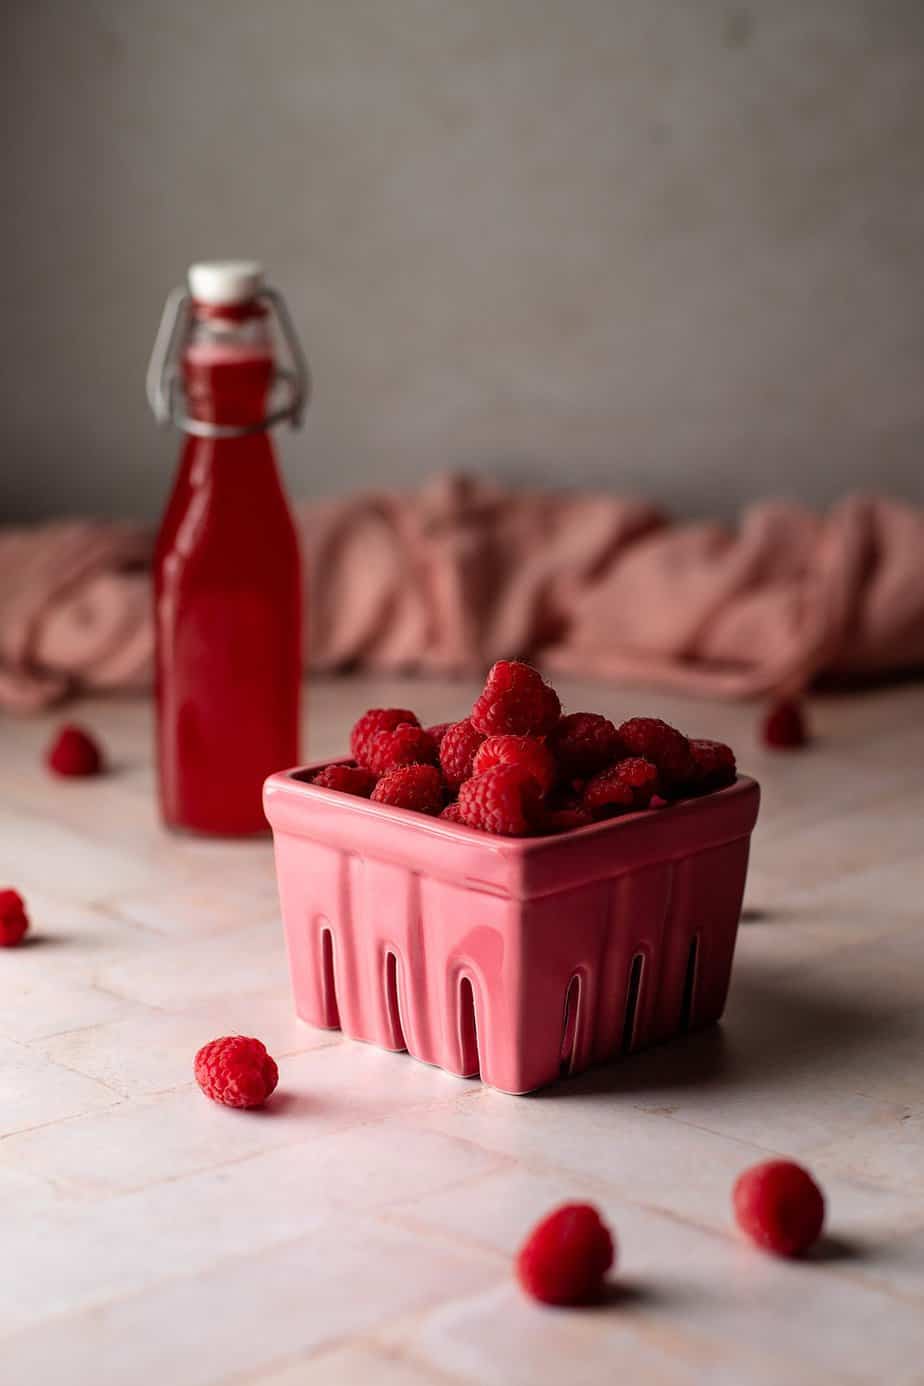 pink carton of red raspberries